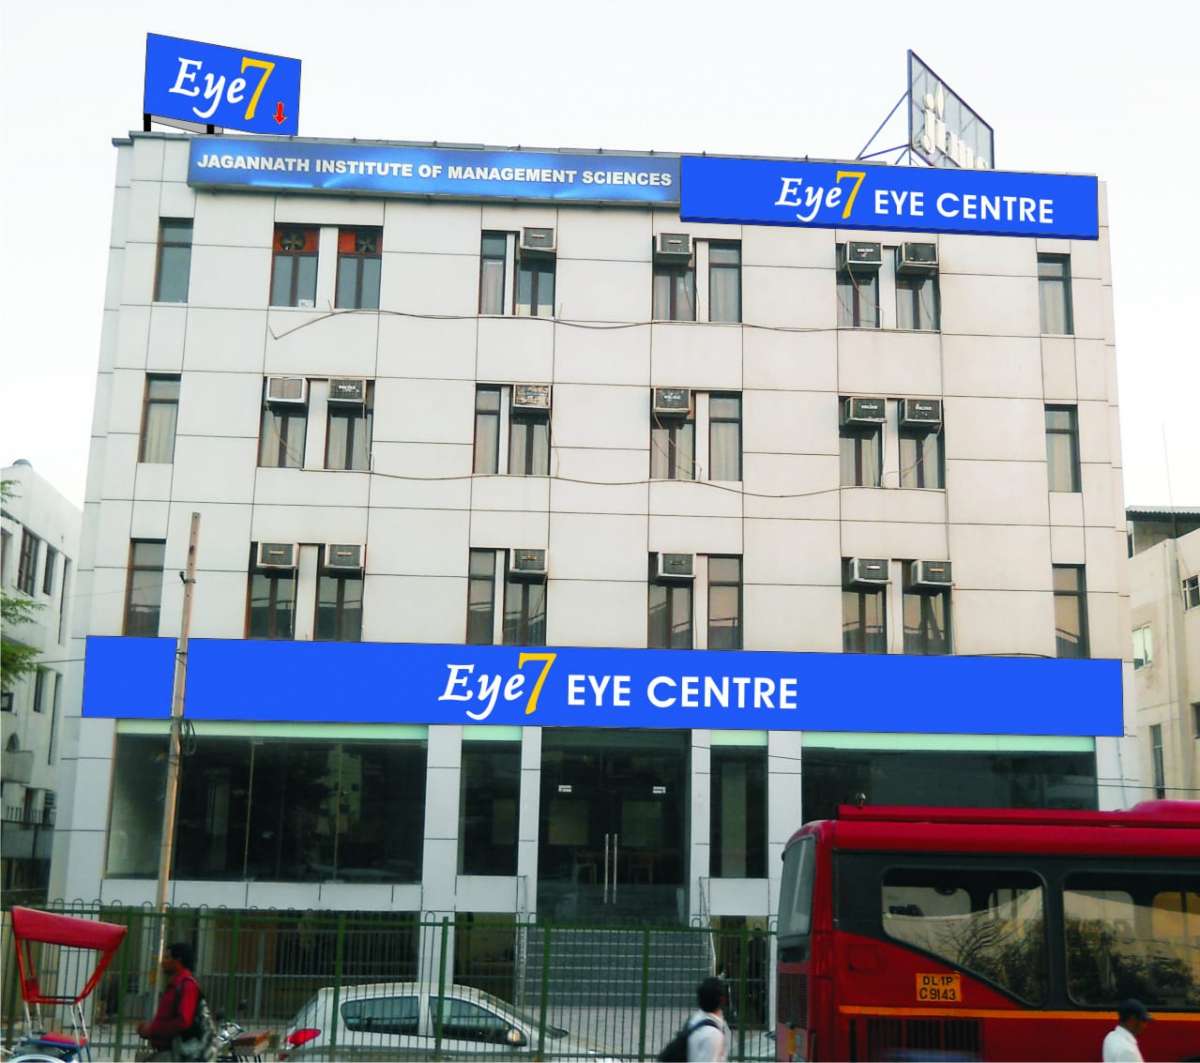 Eye7 Chaudhary Eye Centre, Lajpat Nagar,New Delhi